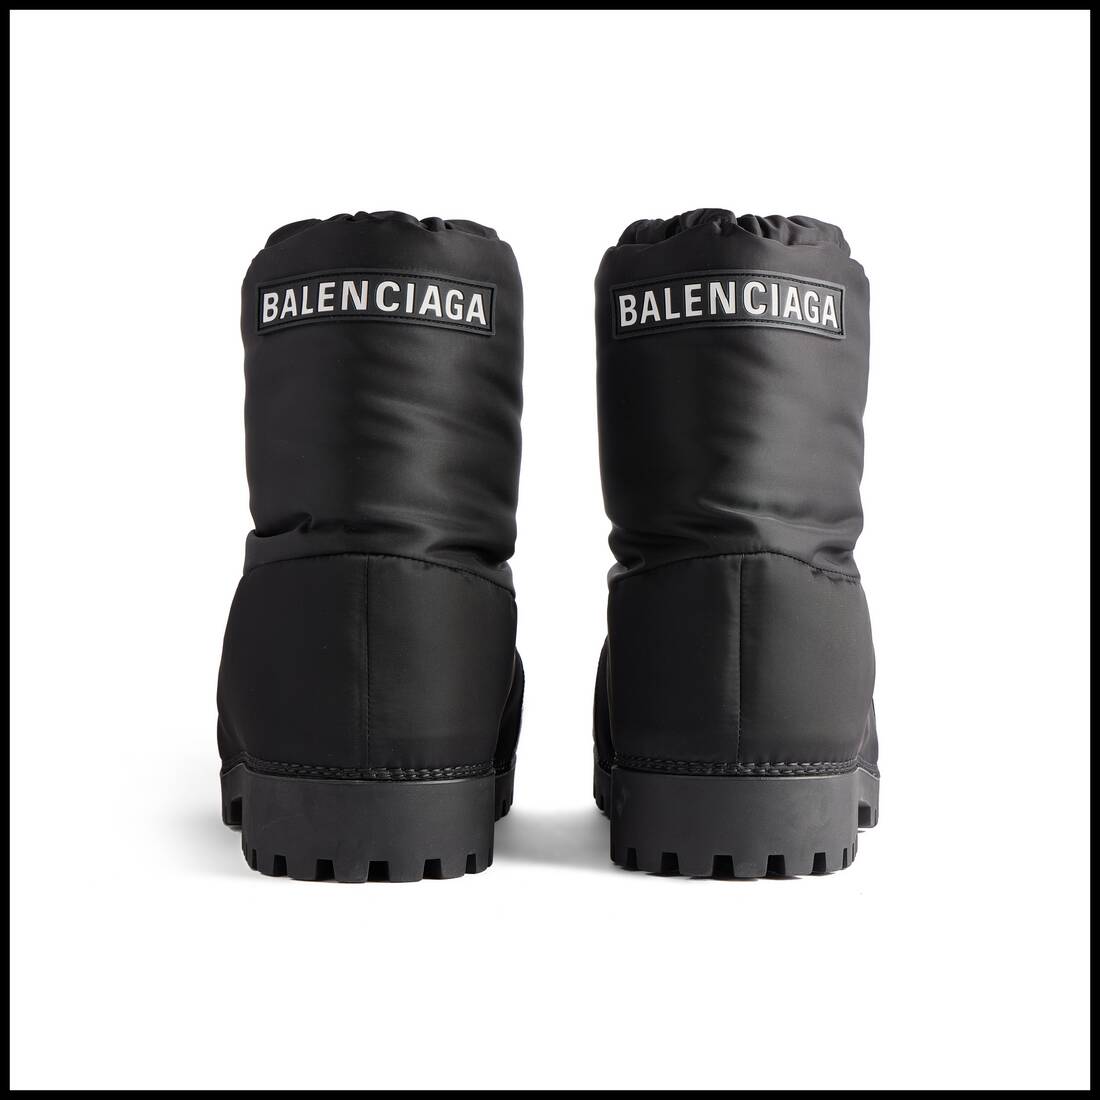 Balenciaga Men's Skiwear Alaska Low Boots - Black - Size 10